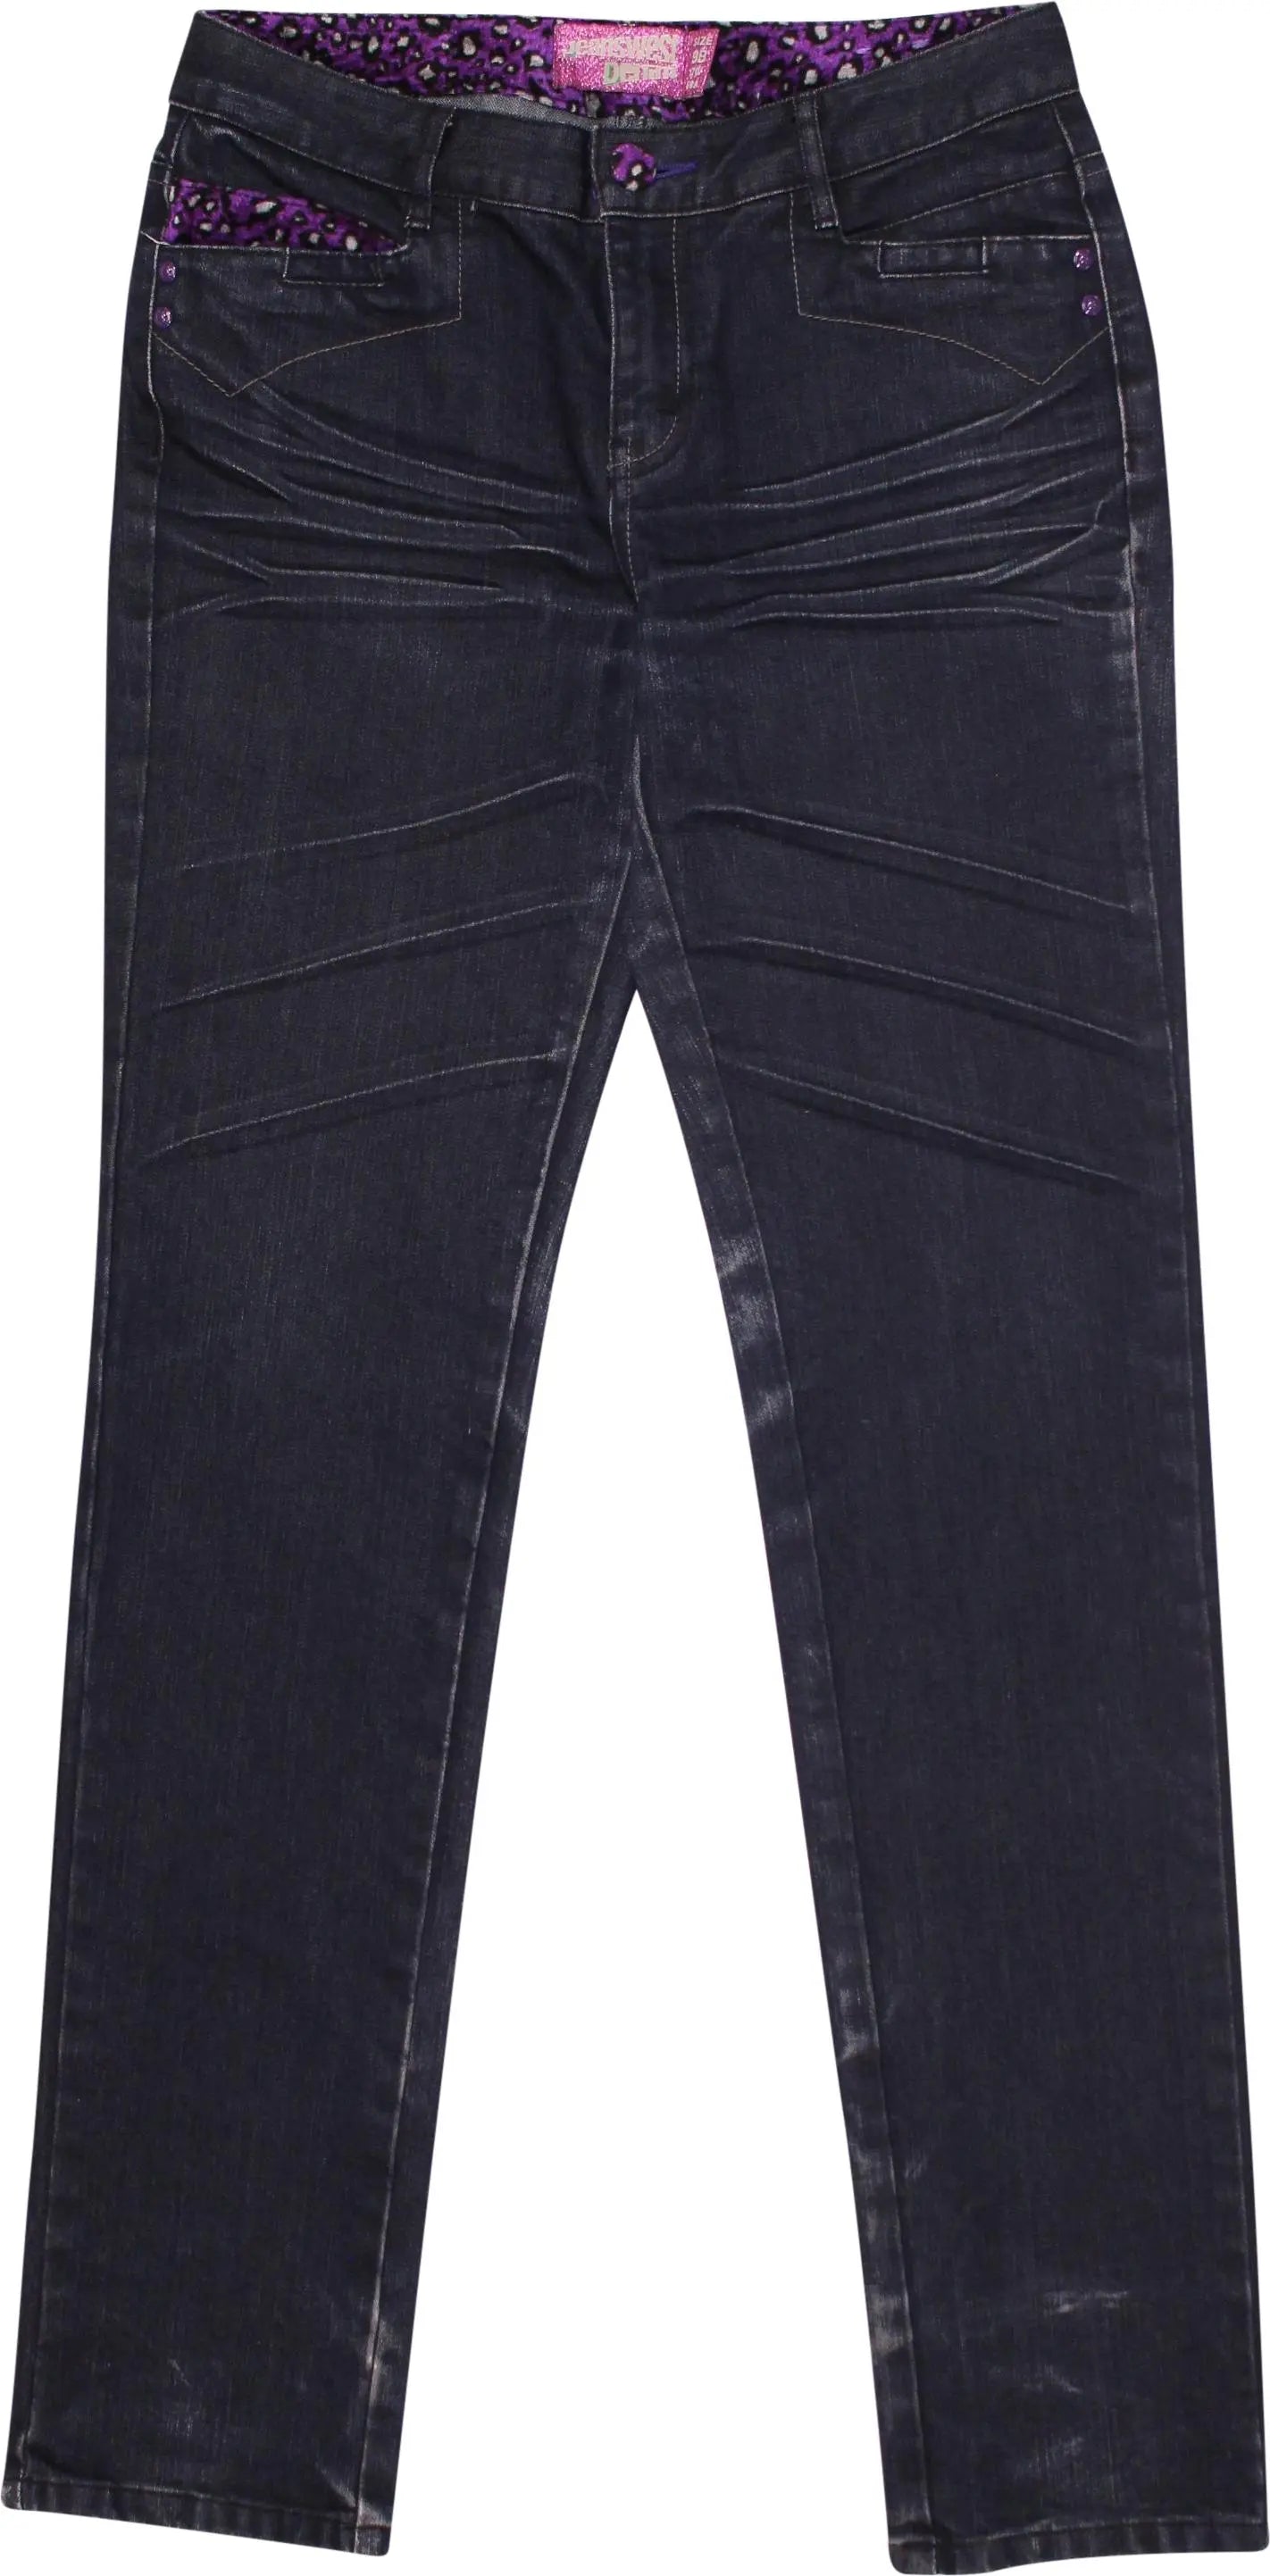 Jeans West Denim - BLUE11022- ThriftTale.com - Vintage and second handclothing